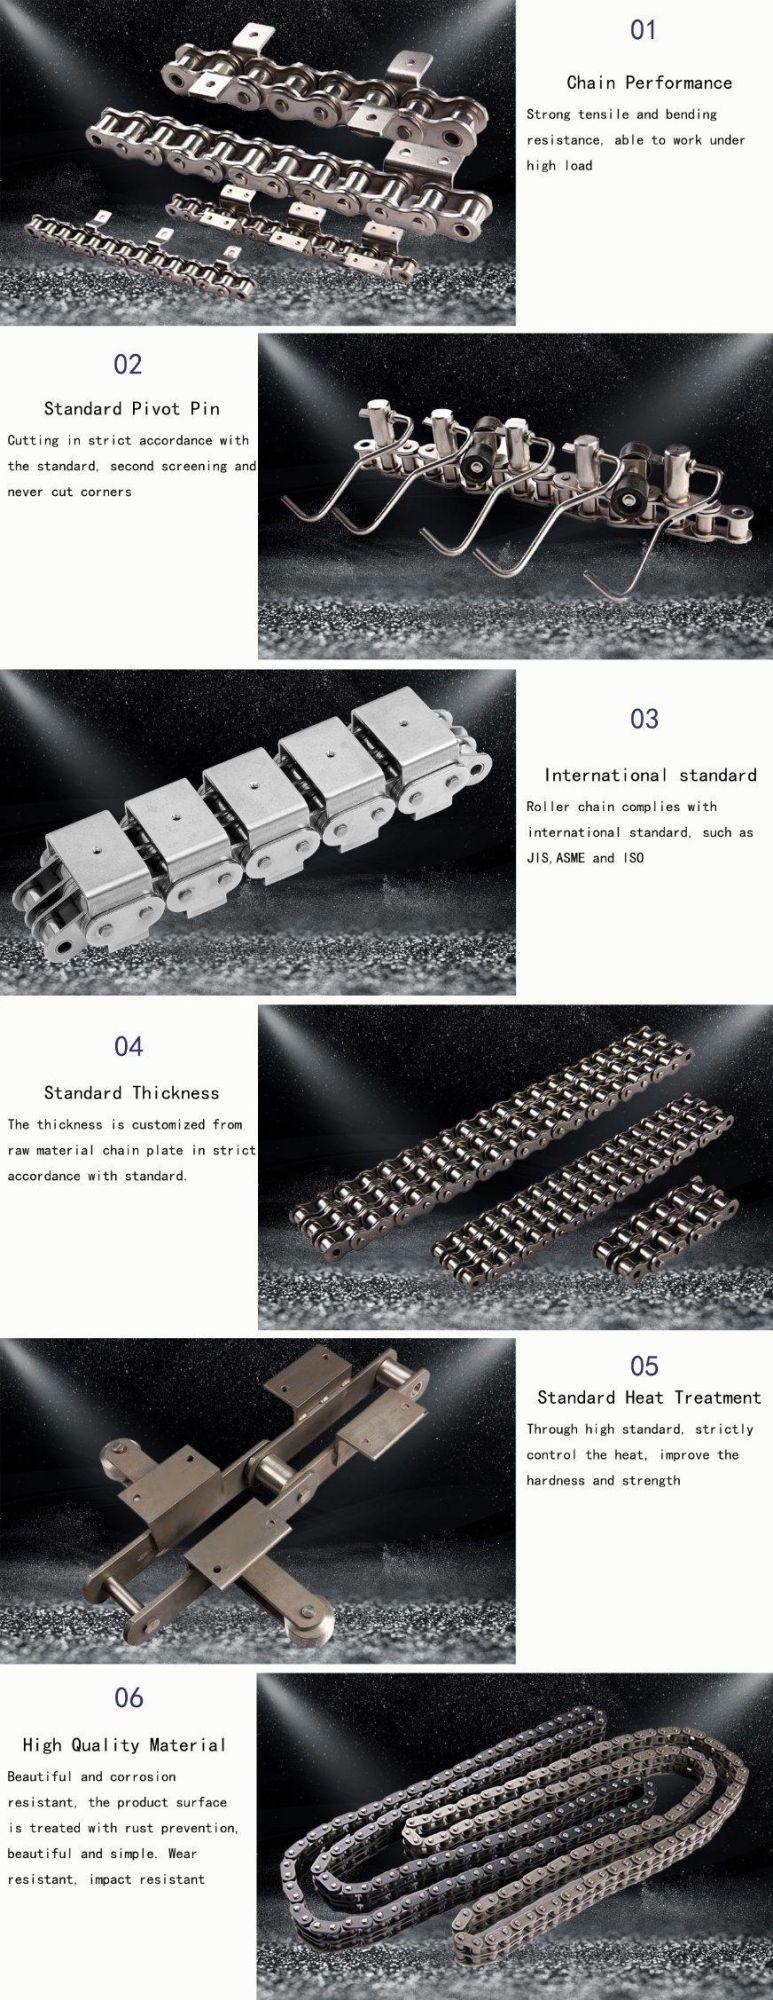 Industrial Standard Stainless Steel Mt Series Roller Chain Conveyor Chains